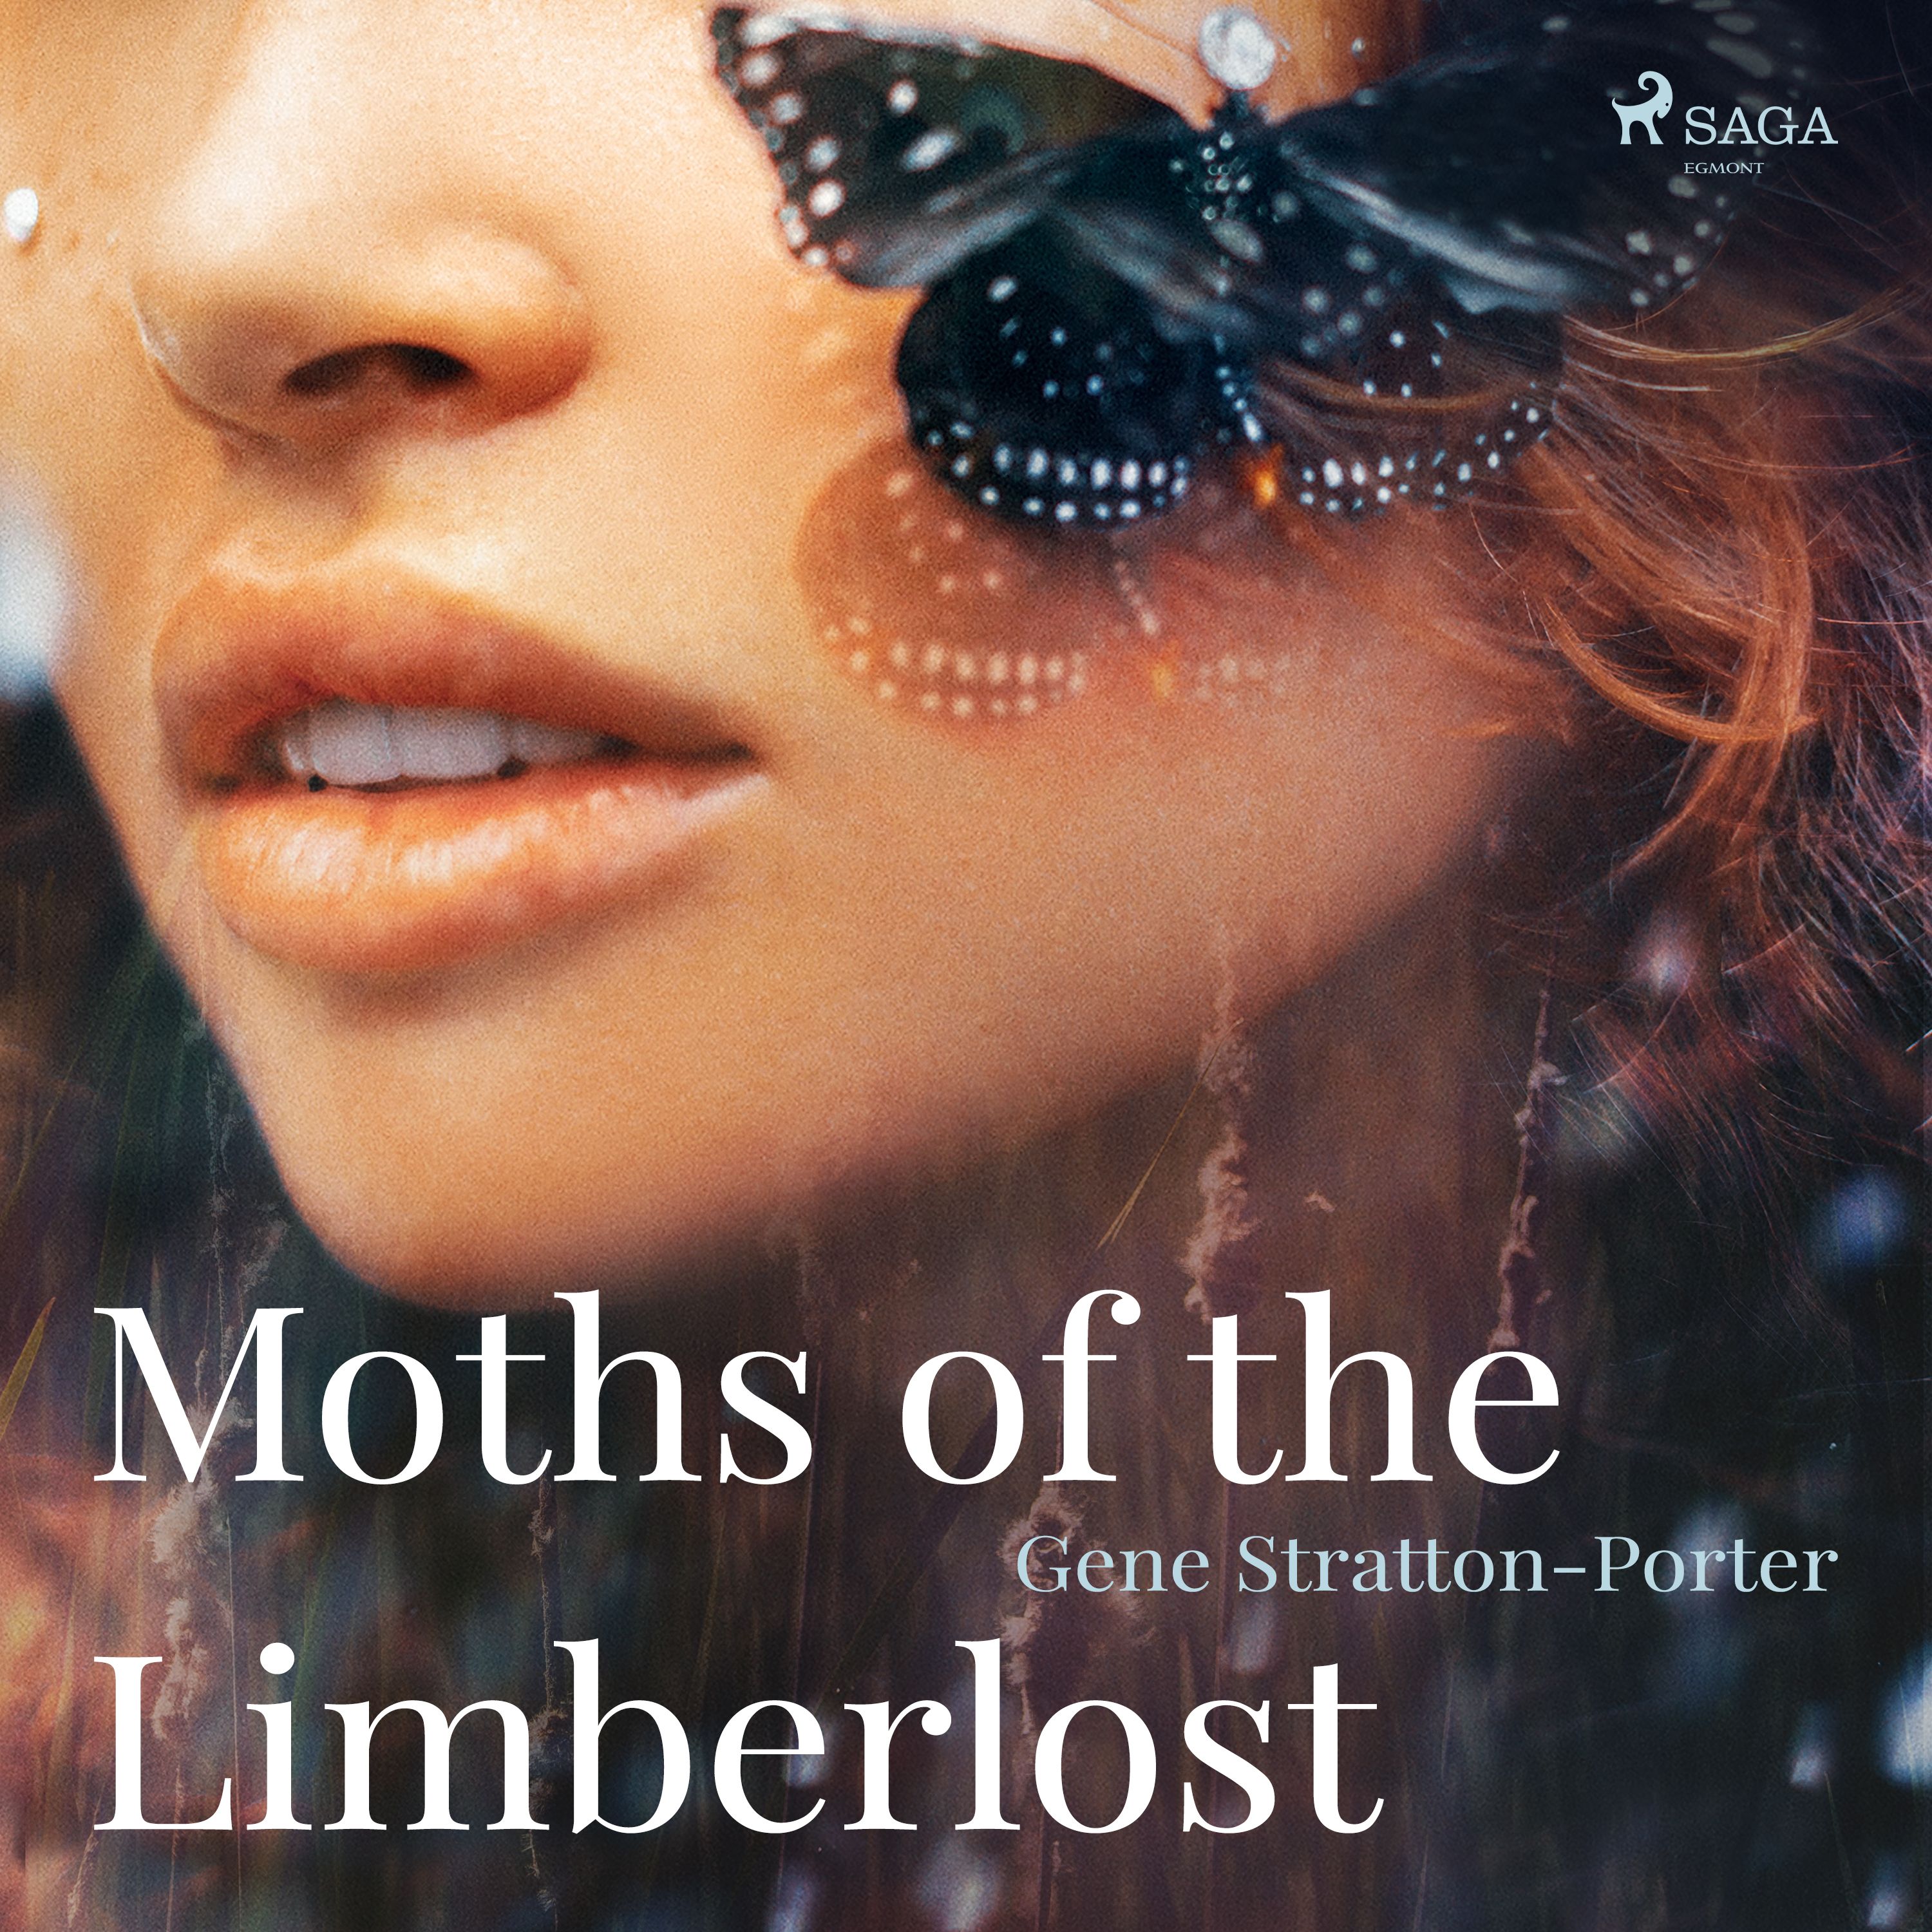 Moths of the Limberlost, lydbog af Gene Stratton-Porter